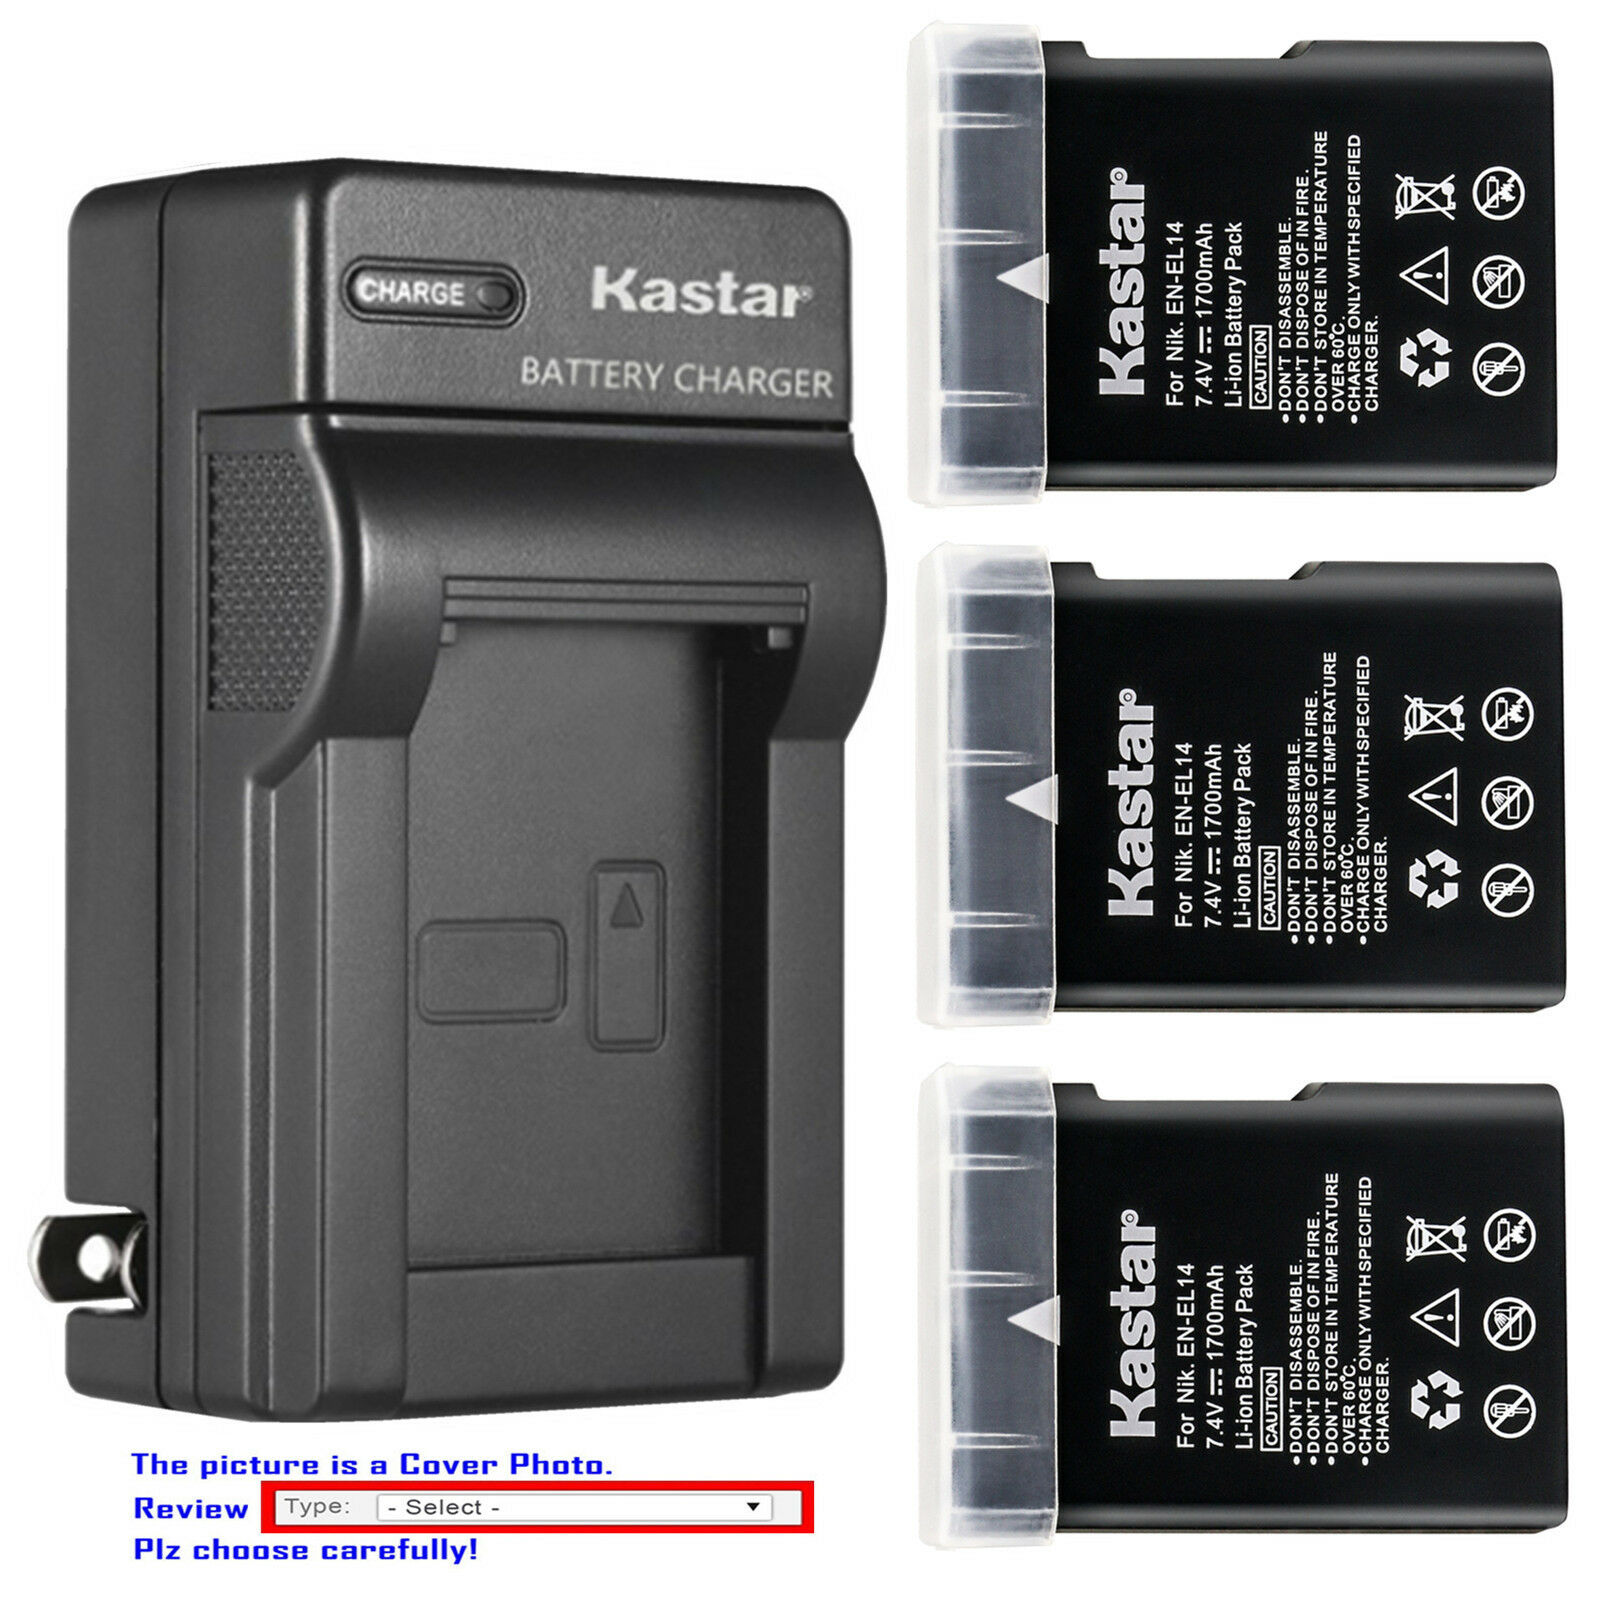 Kastar Battery Wall Charger For Nikon En-el14 Mh-24 & Nikon D3200 Dslr Camera